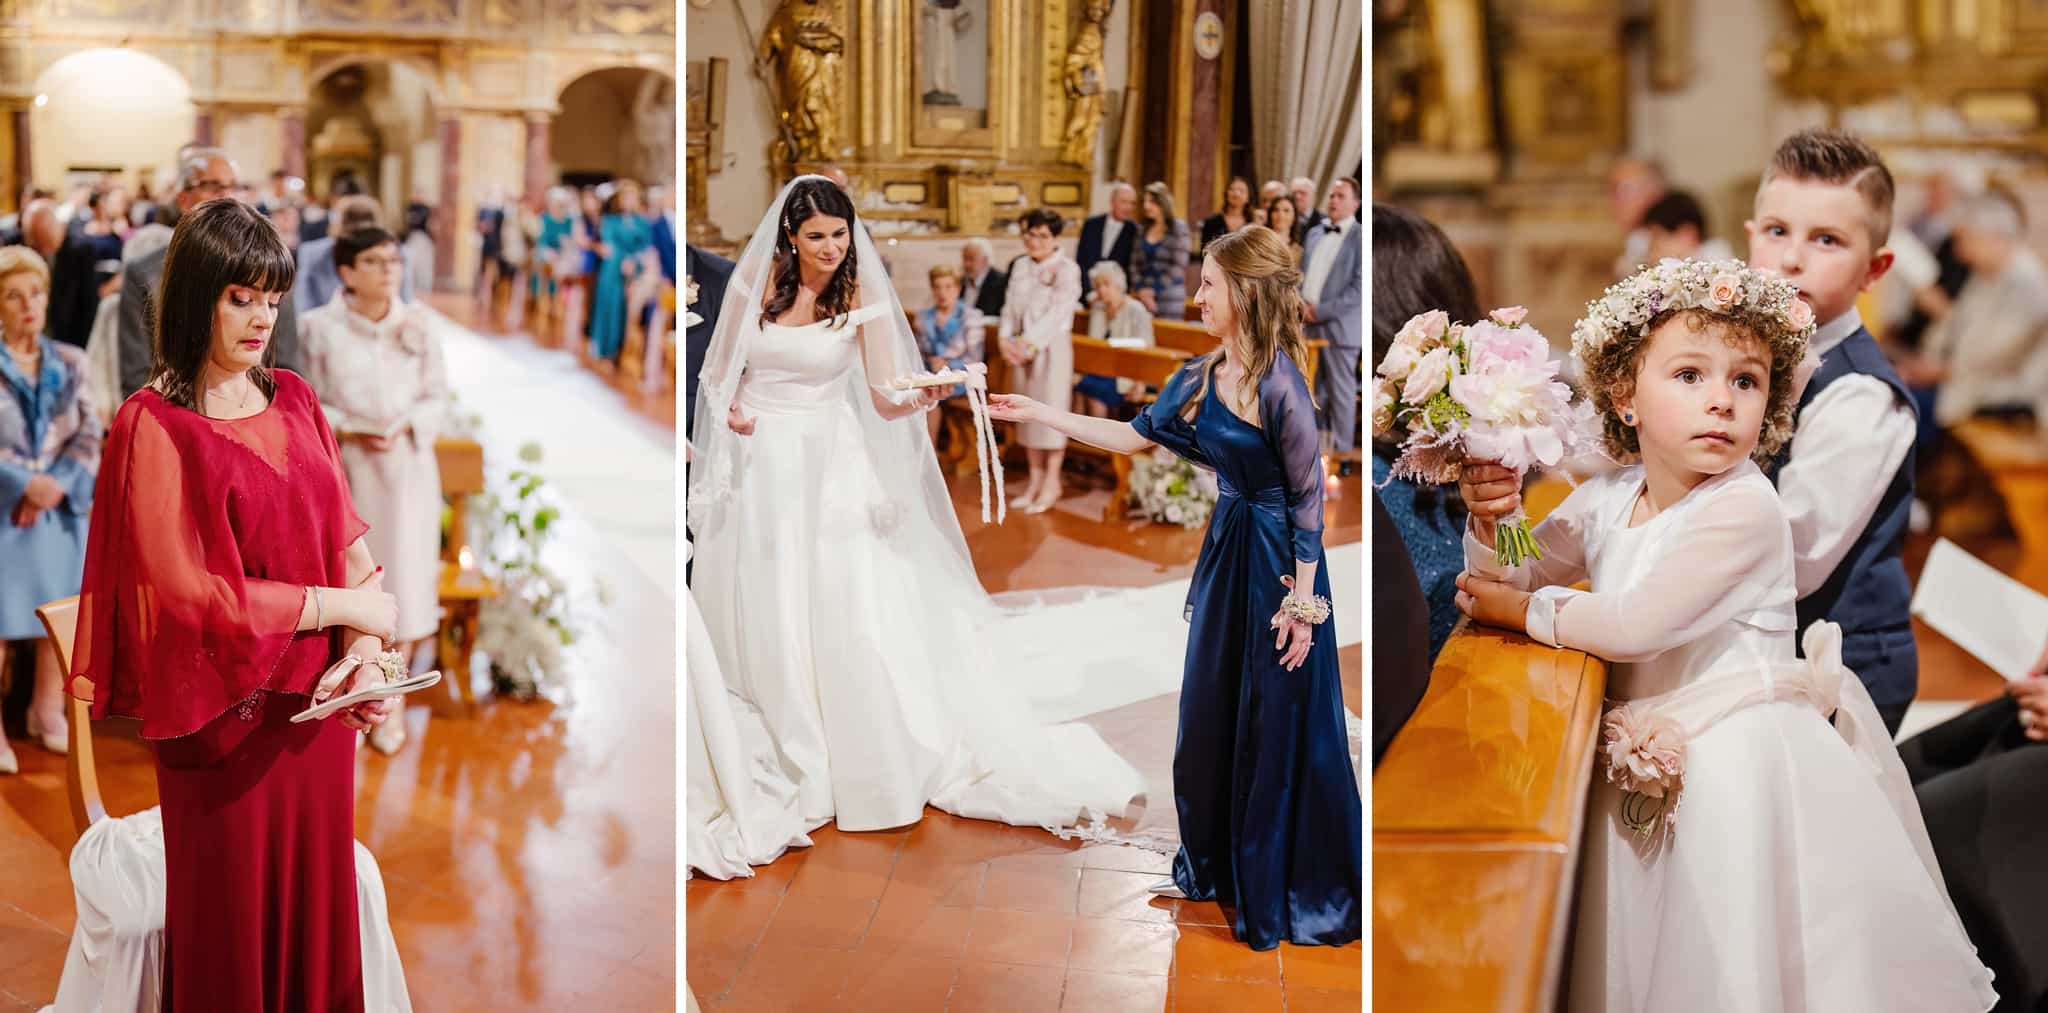 fotografo-matrimonio-abruzzo-cerimonia-chiesa-testimoni-sposi-fedi-anelli